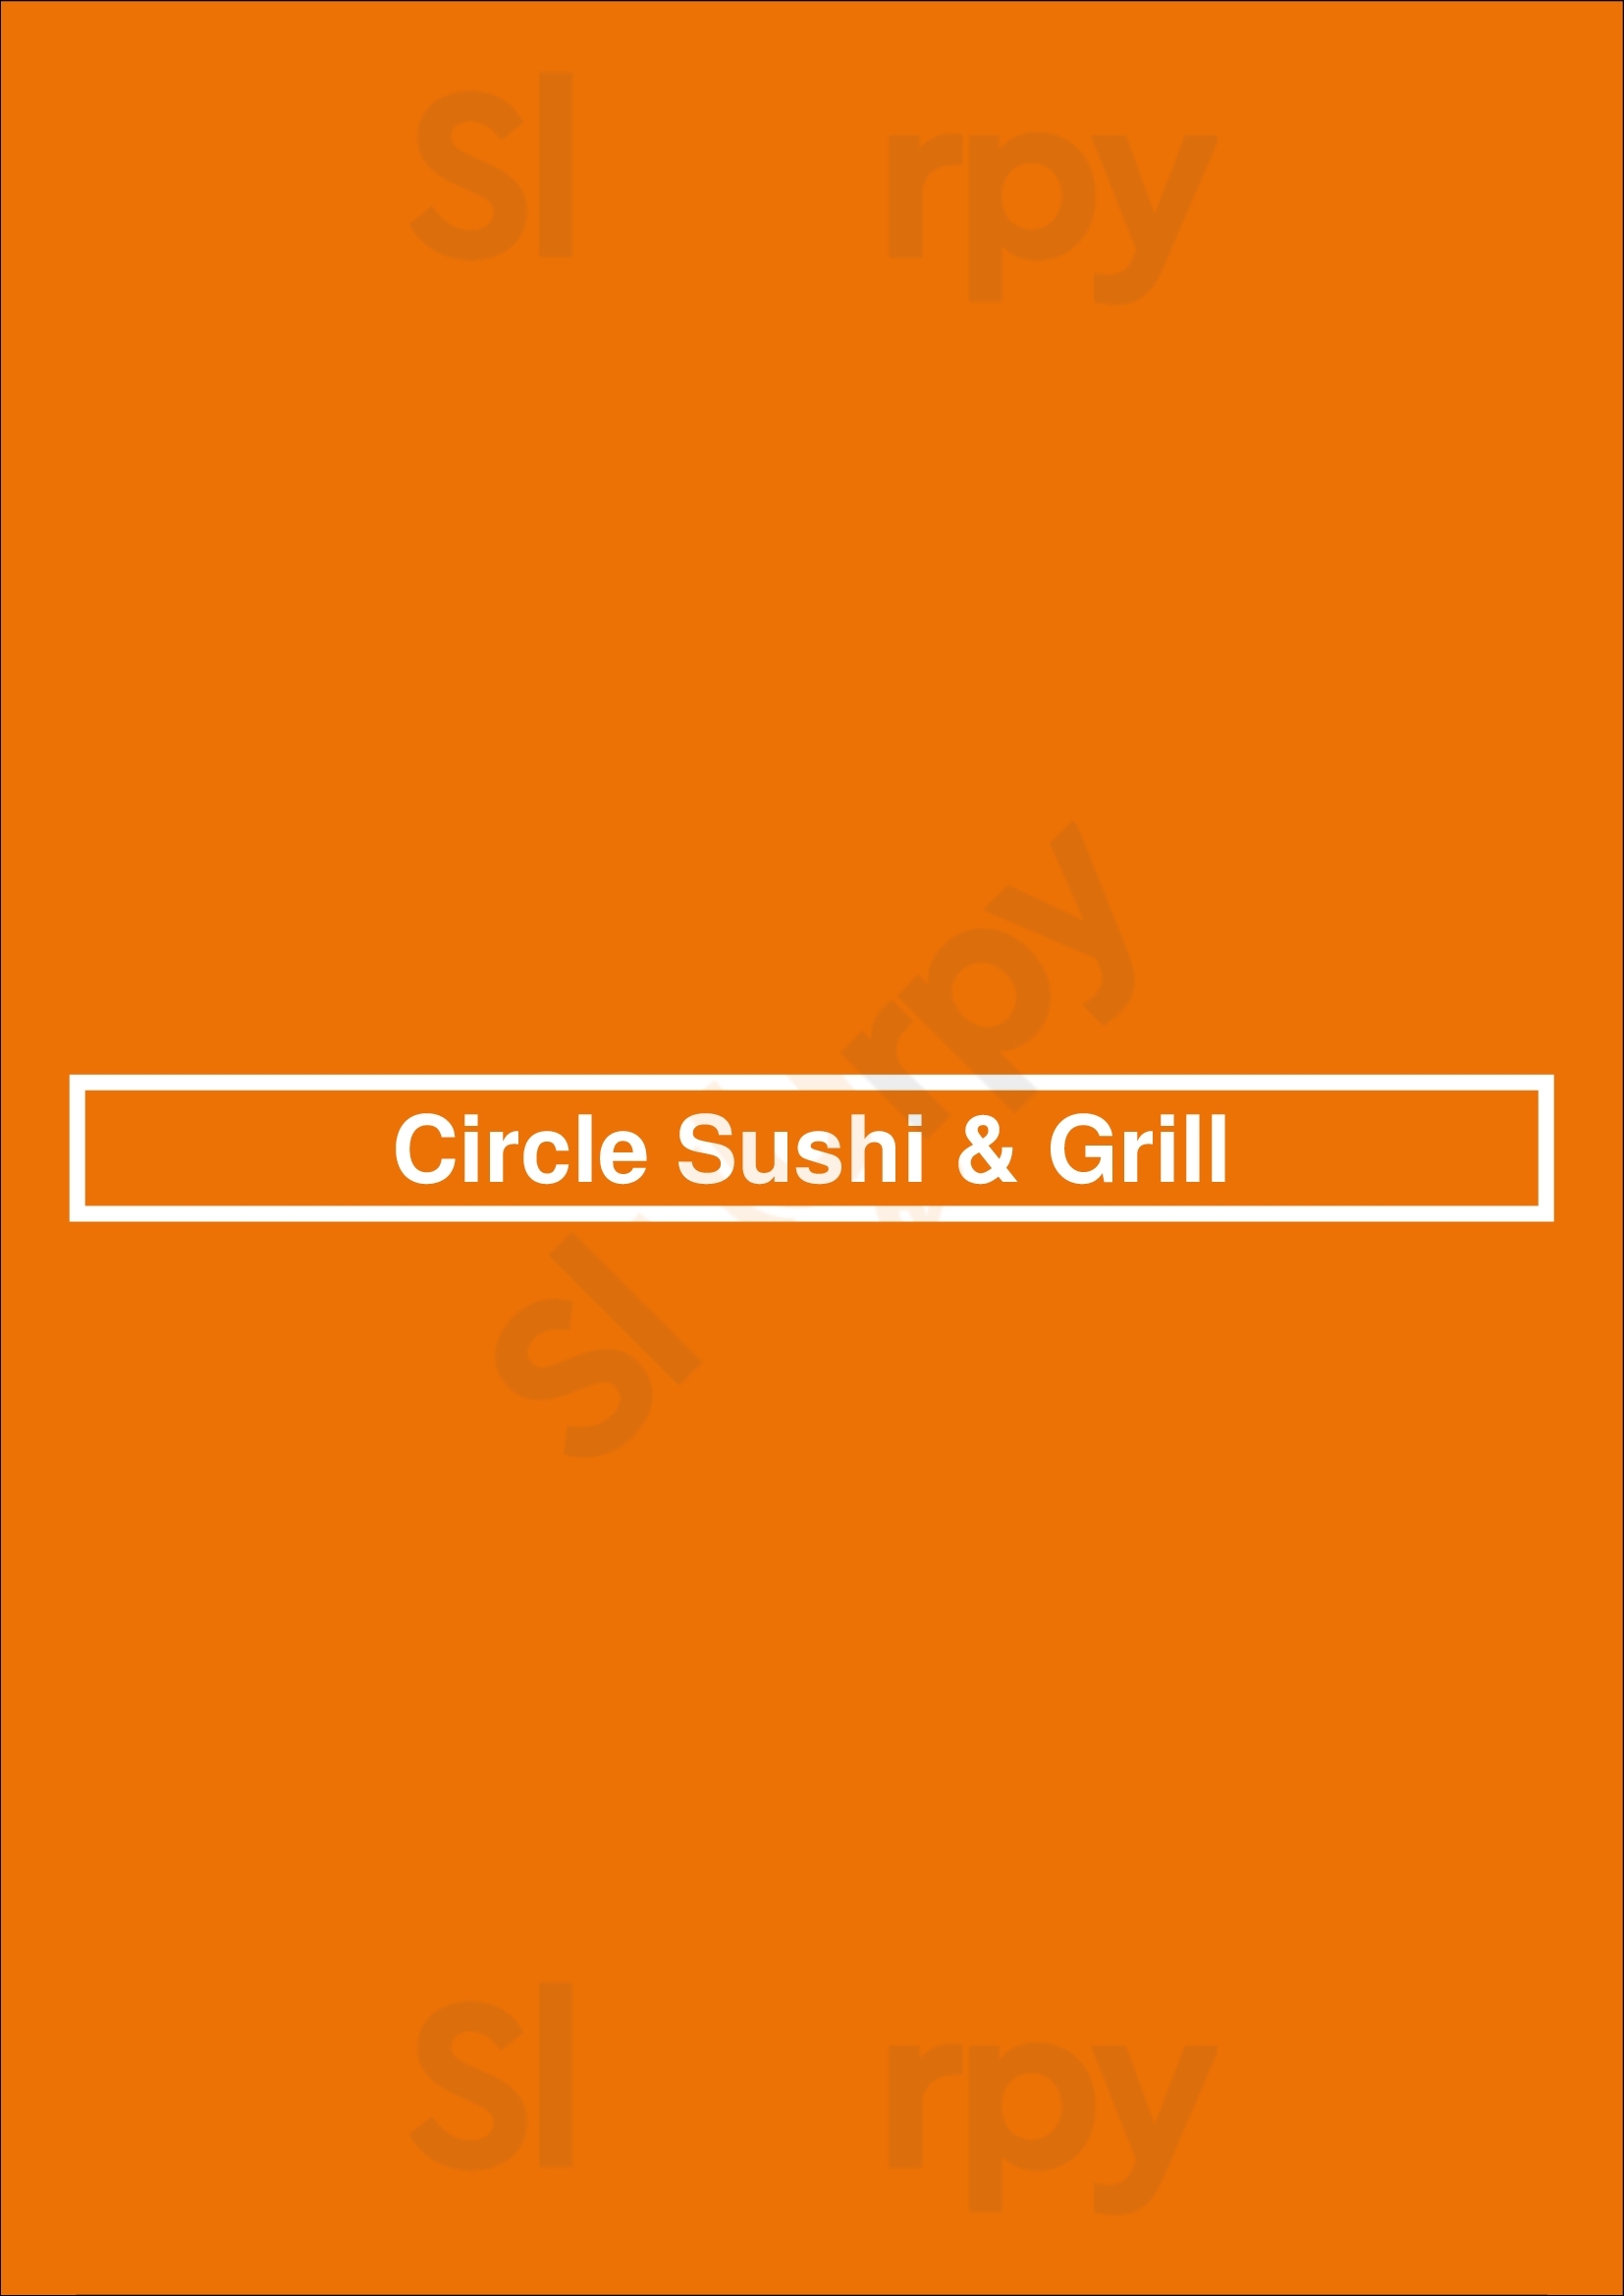 Circle Sushi & Grill Chicago Menu - 1